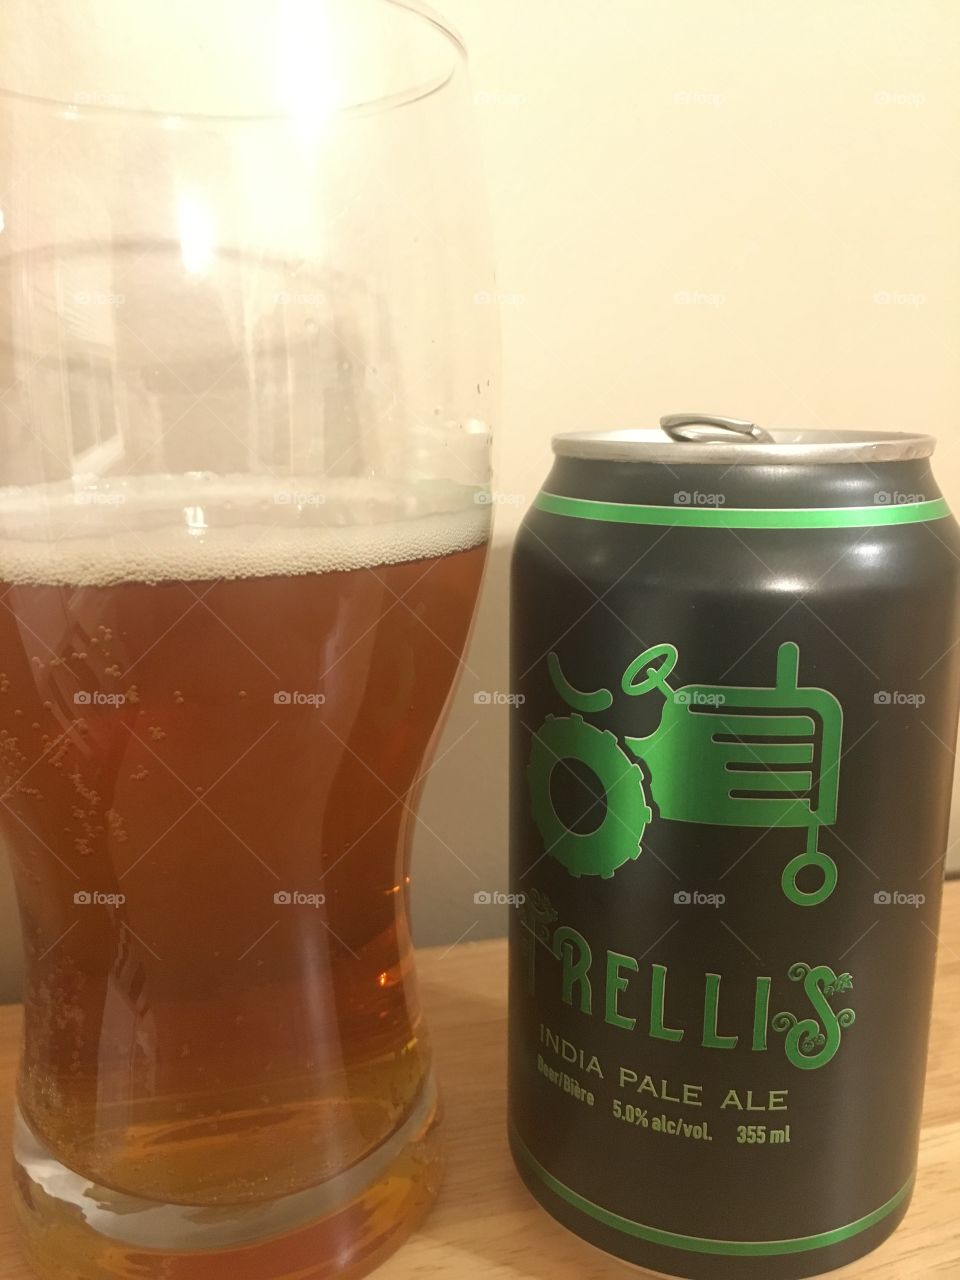 Trellis India Pale Ale beer